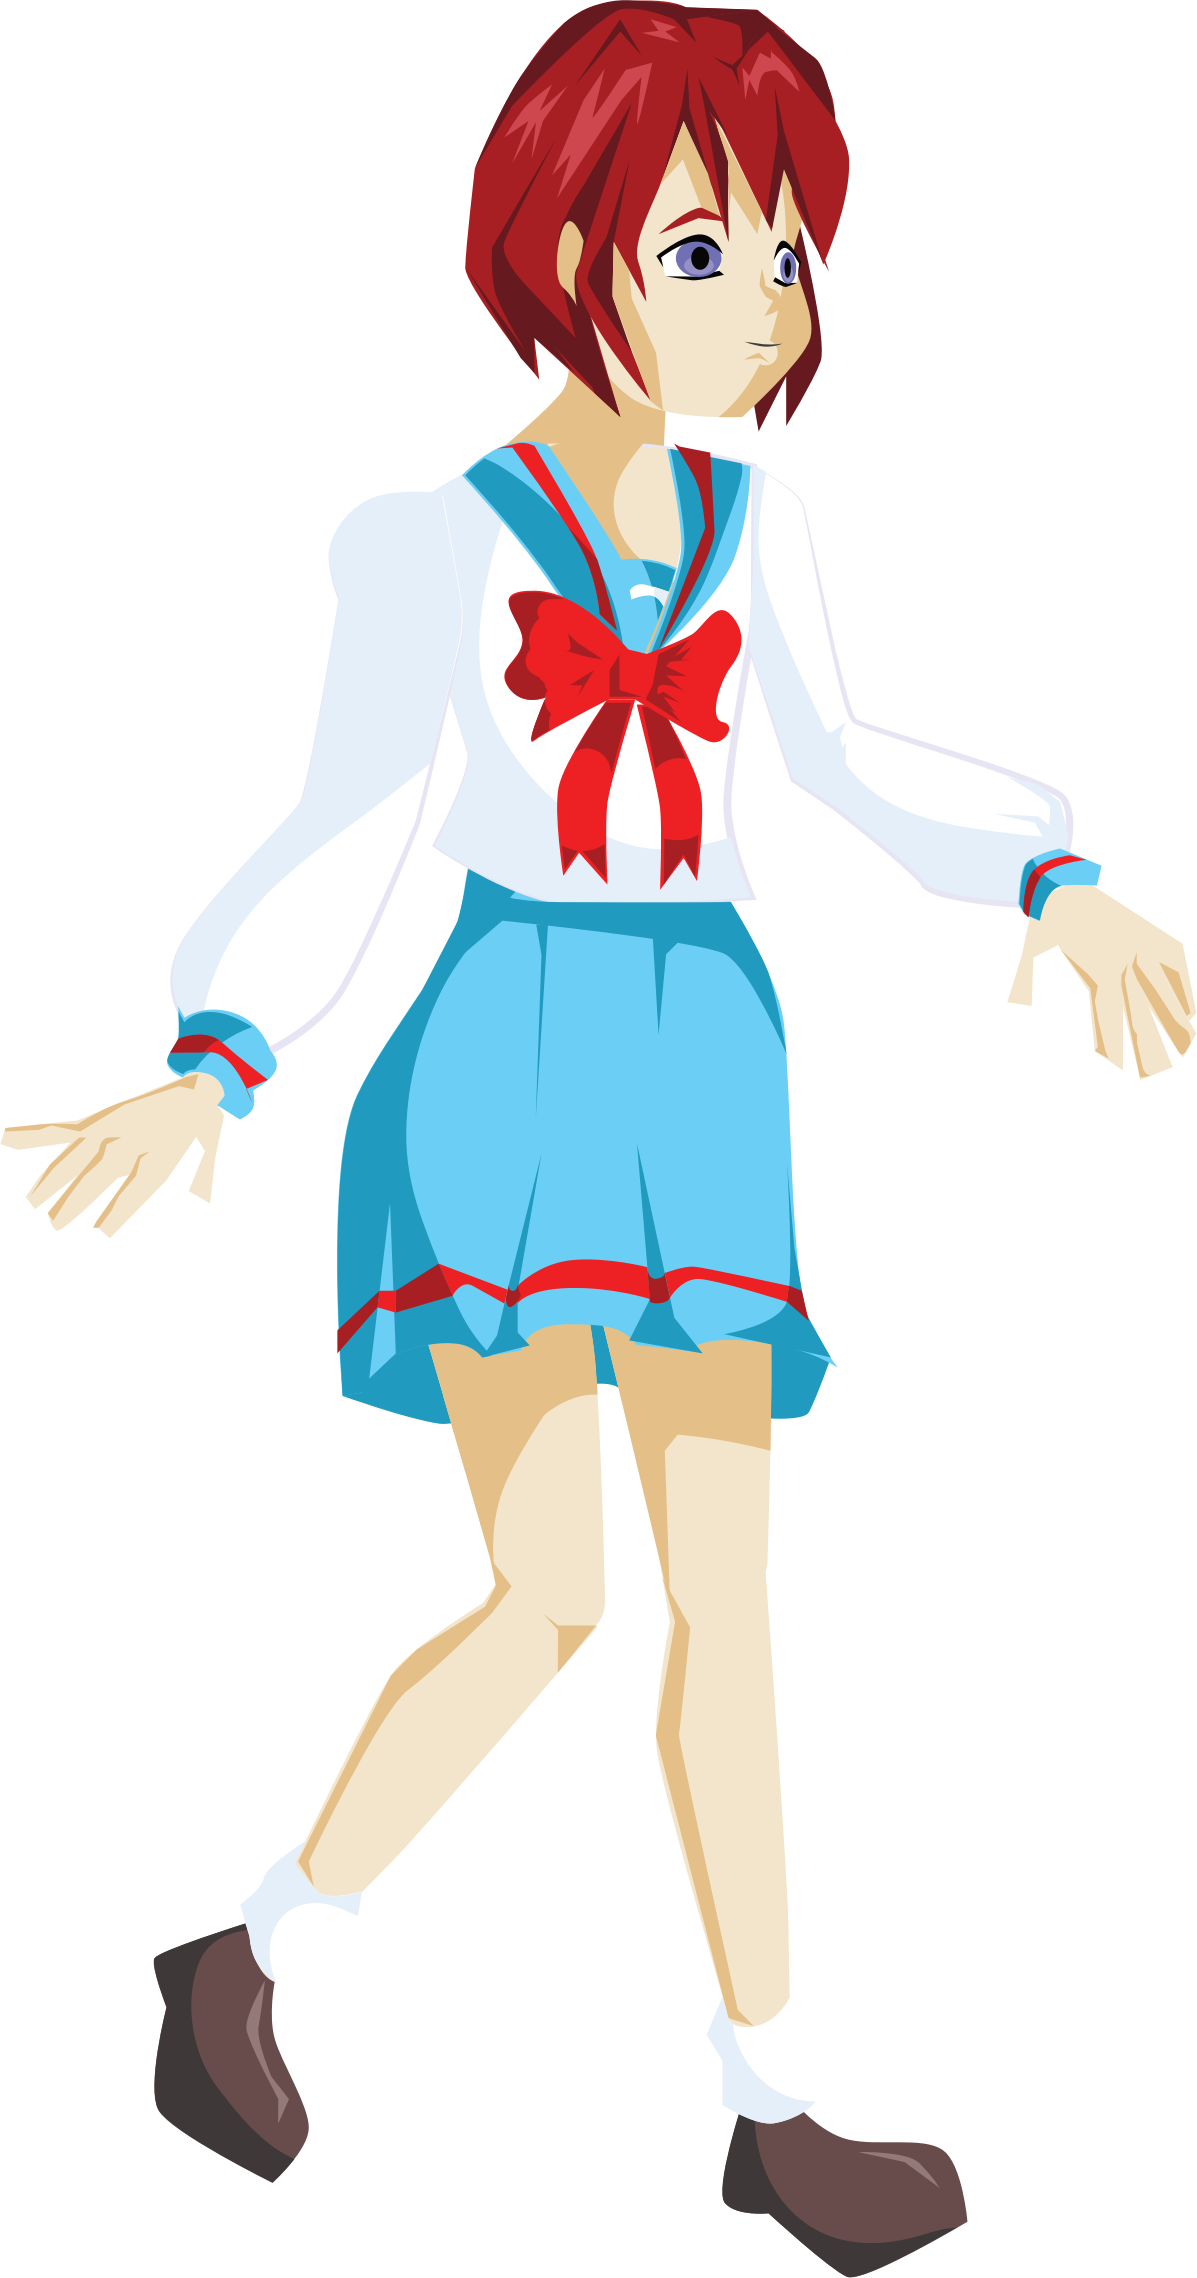 Anime clipart anime character. School girl big image